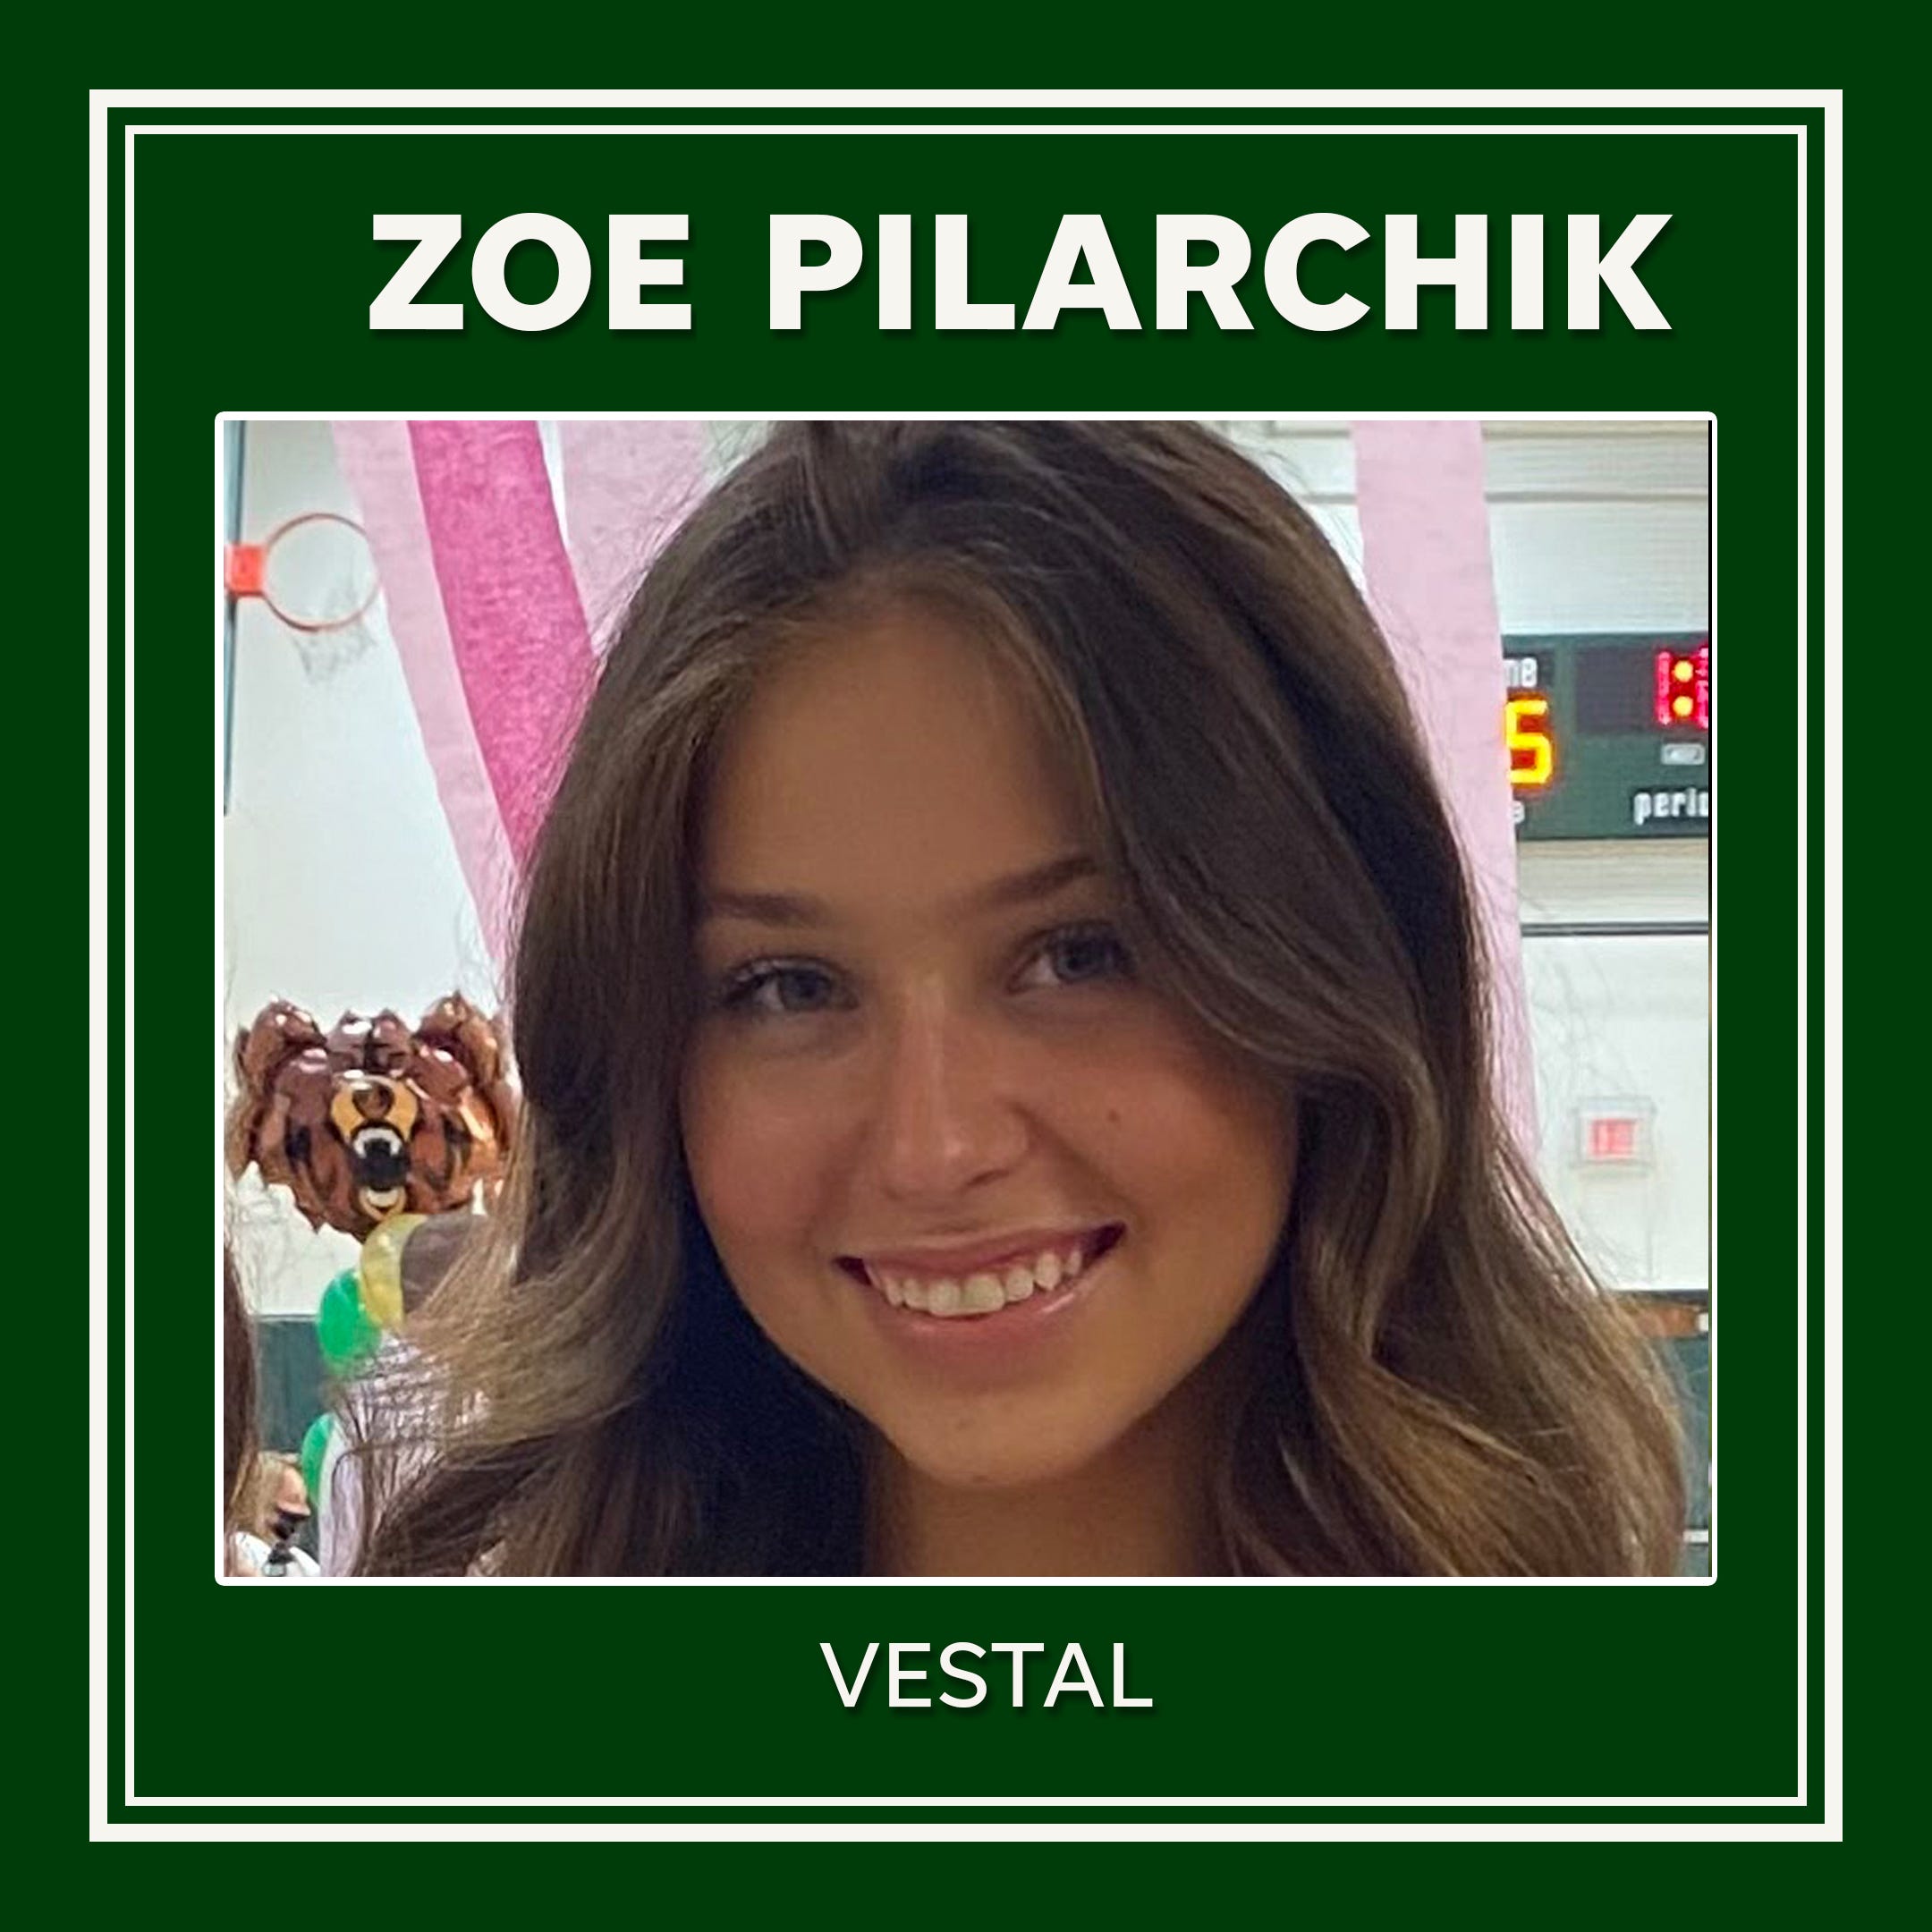 Zoe Pilarchik